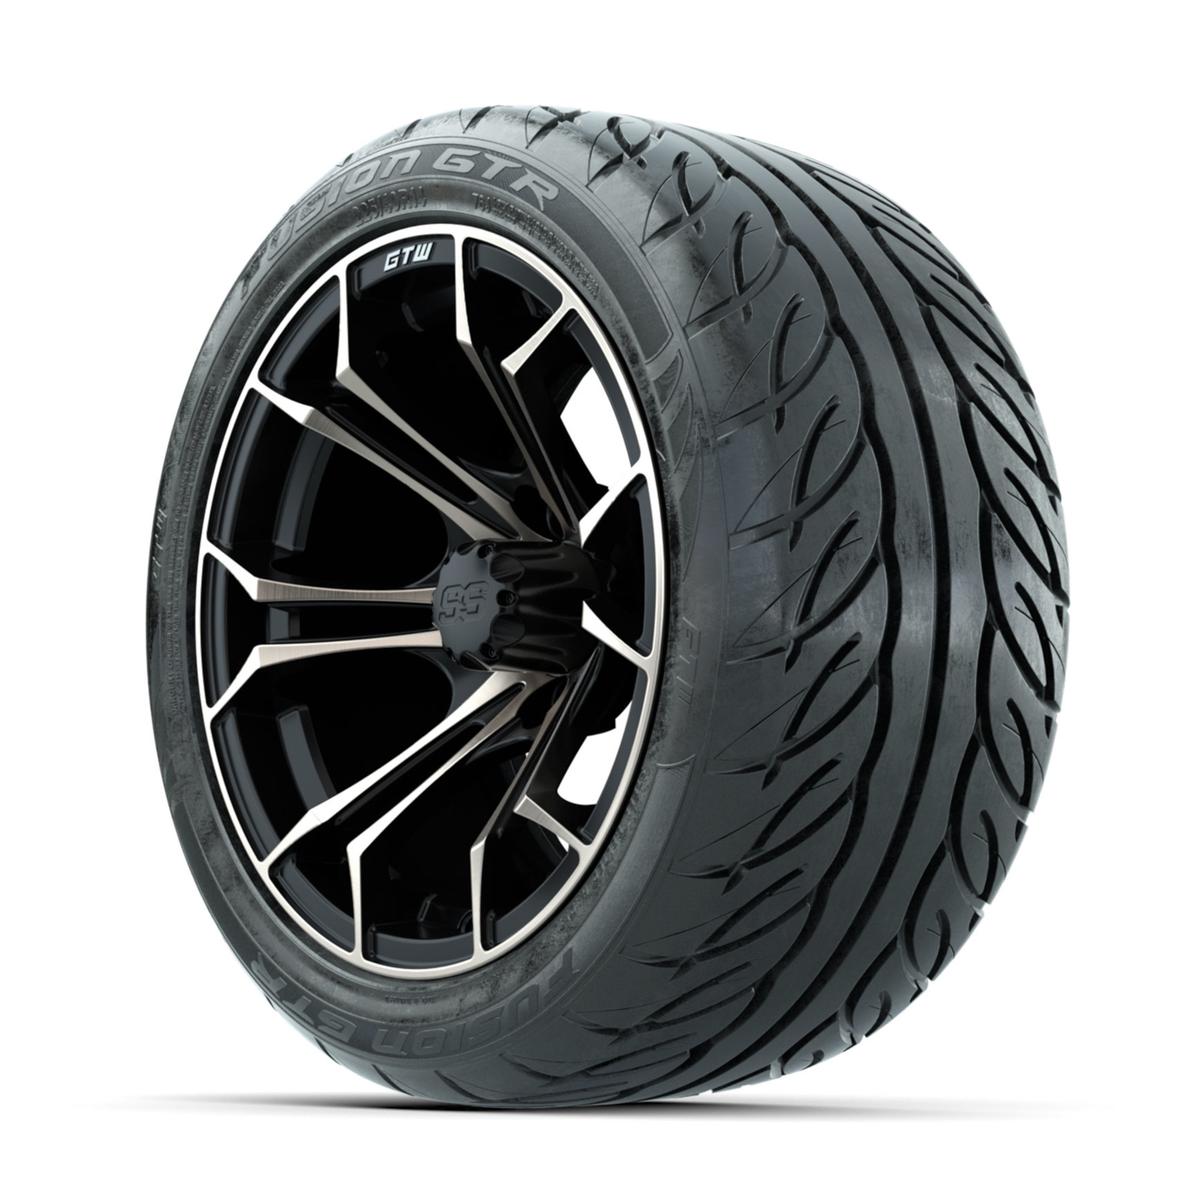 GTW Spyder Bronze/Matte Black 14 in Wheels with 225/40-R14 Fusion GTR Street Tires – Full Set